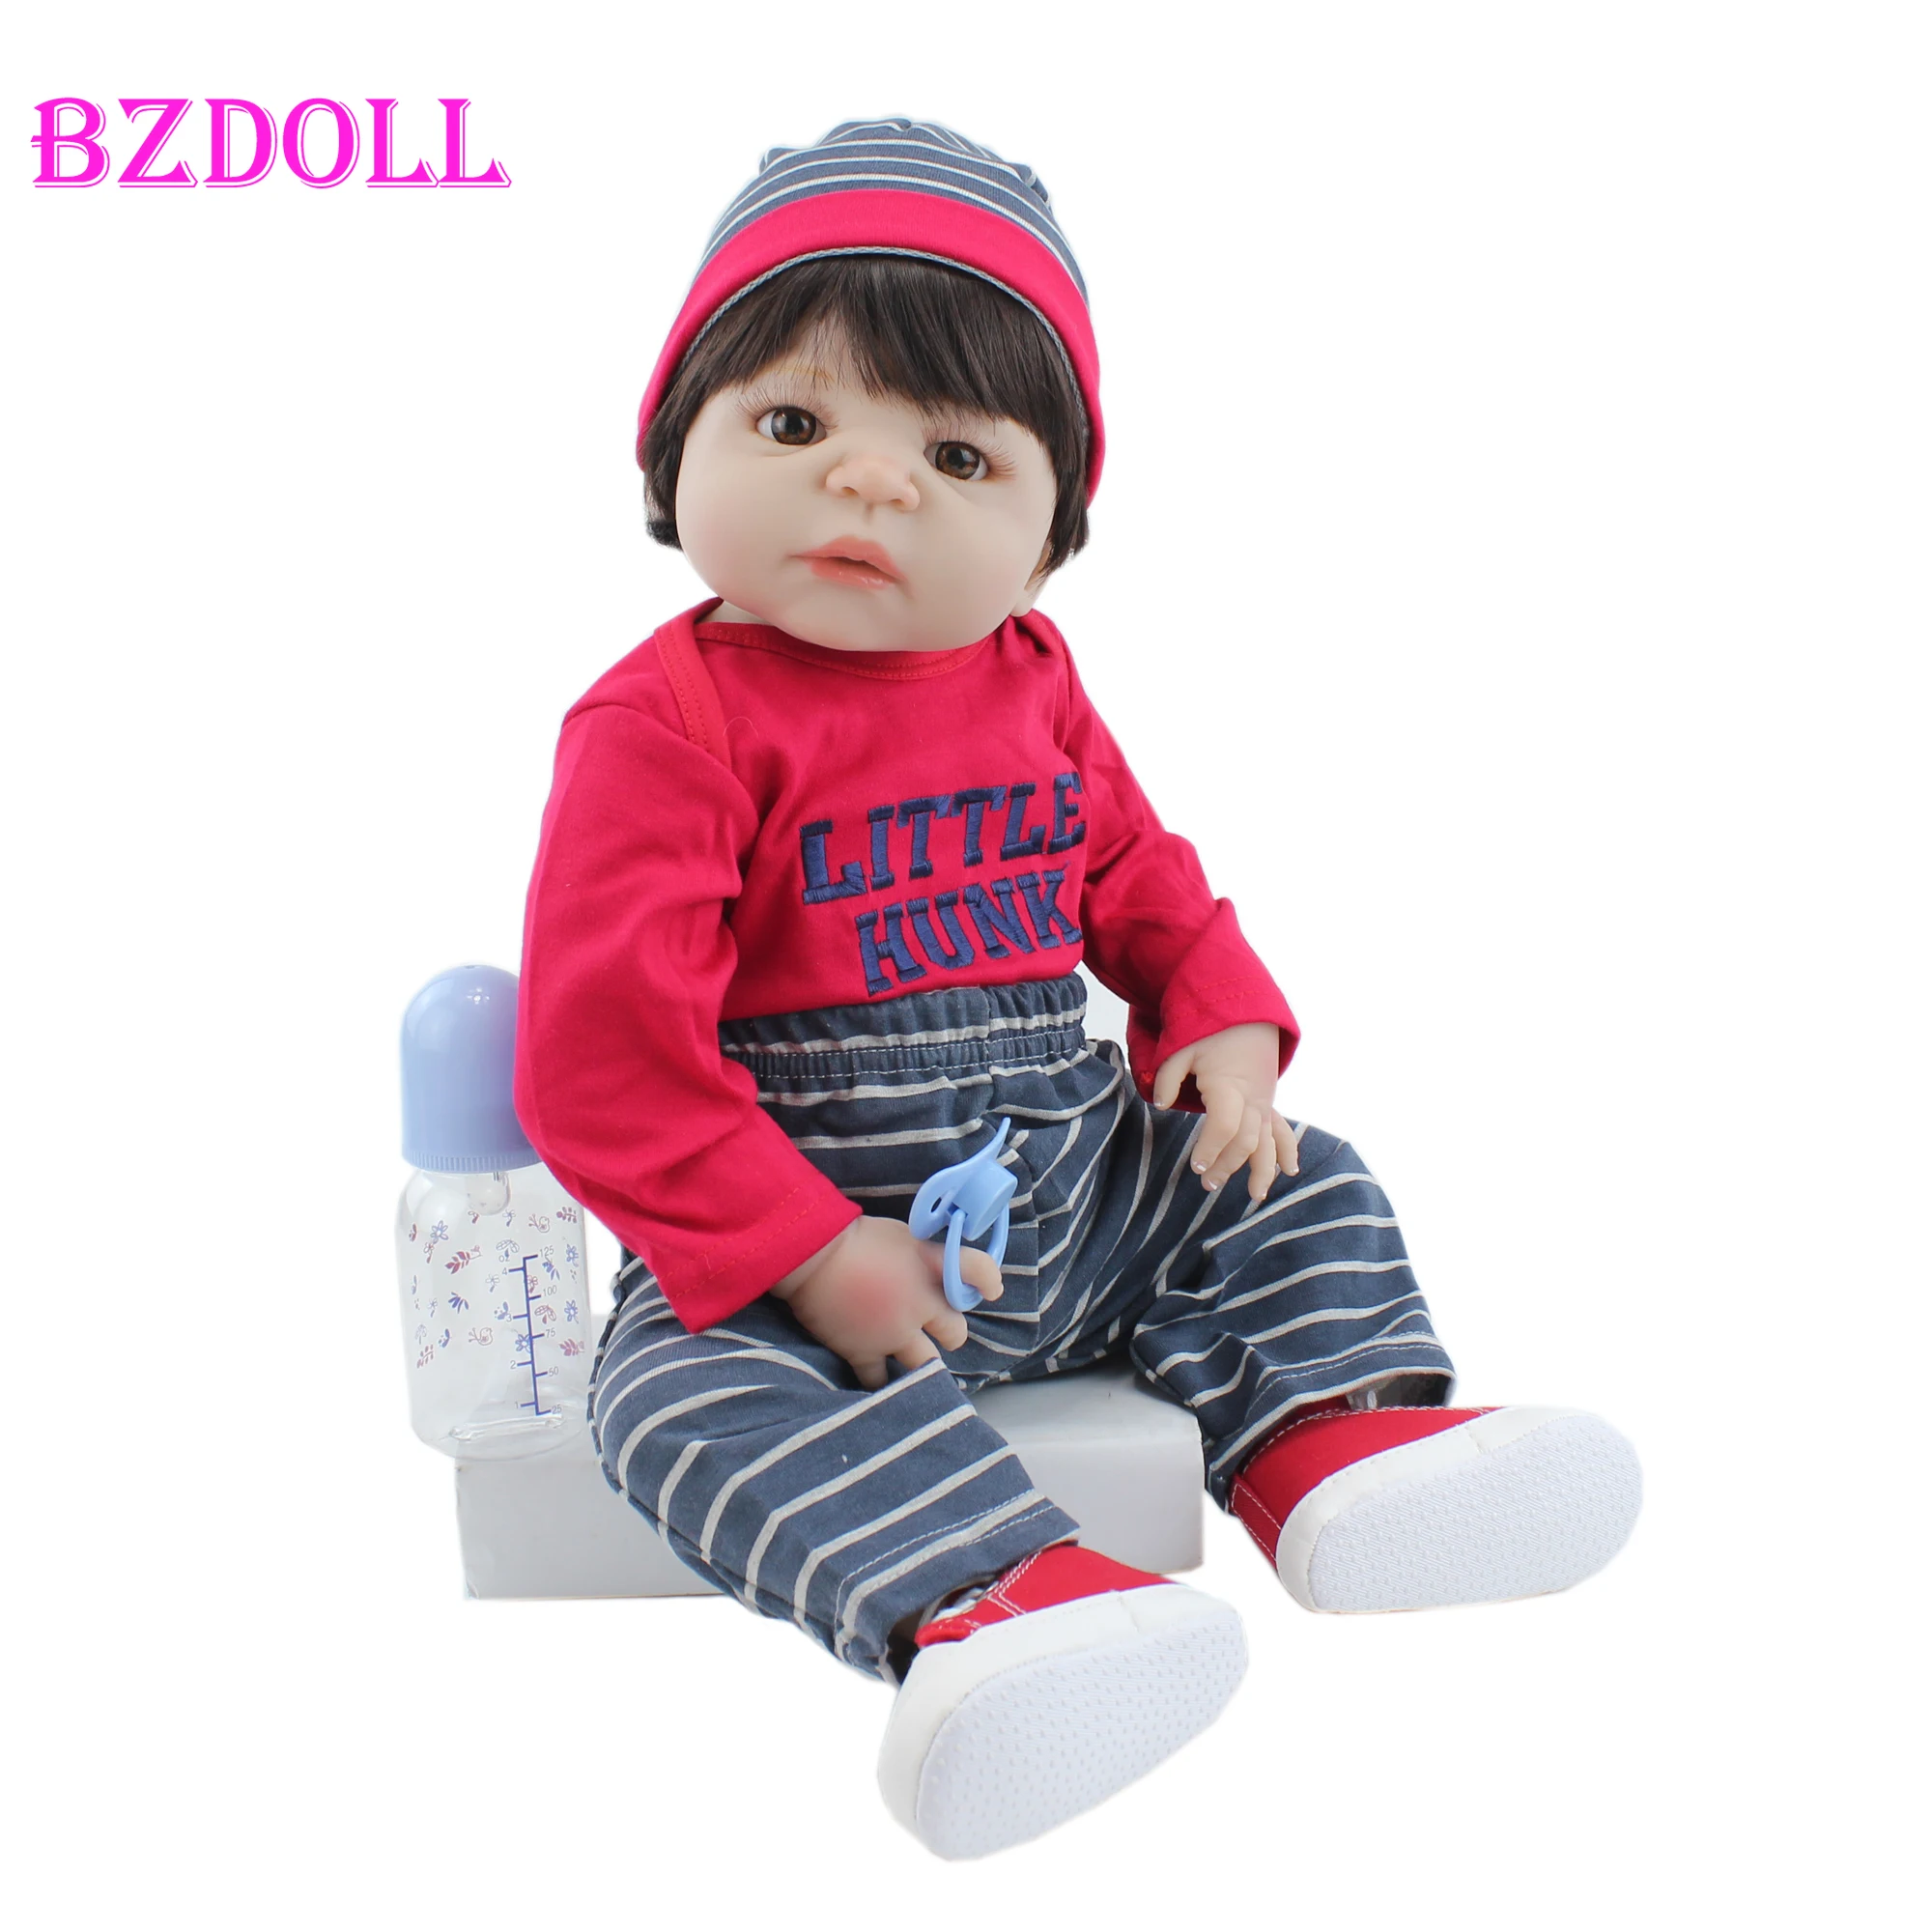 

55CM Full Soft Silicone Reborn Boy Doll Lifelike Vinyl Newborn Alive Babies Bebe Boneca Child Dress Up Toy Gift